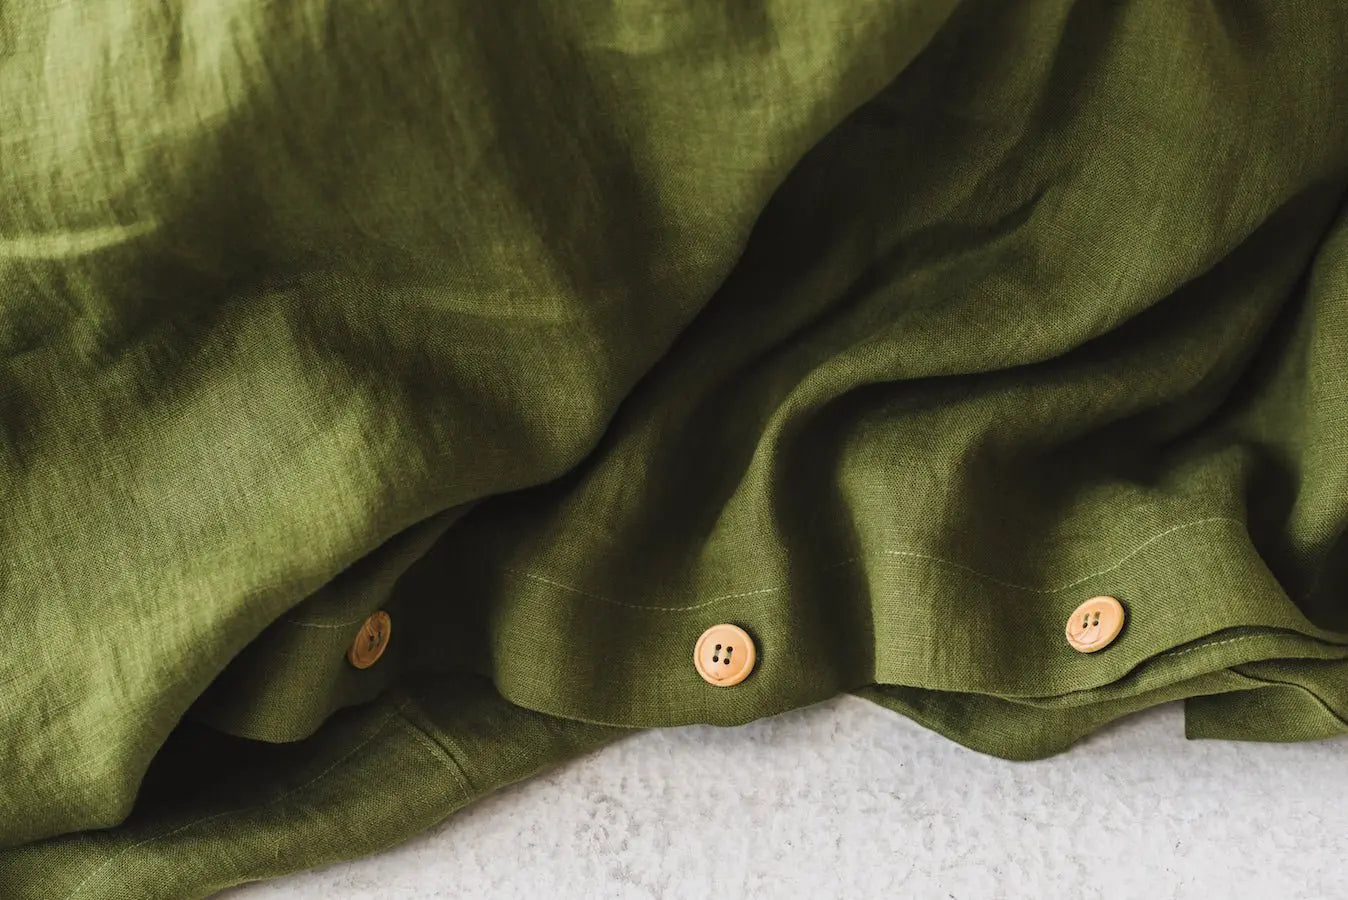 Soft Linen Duvet Cover in Green Moss - Epic Linen luxury linen